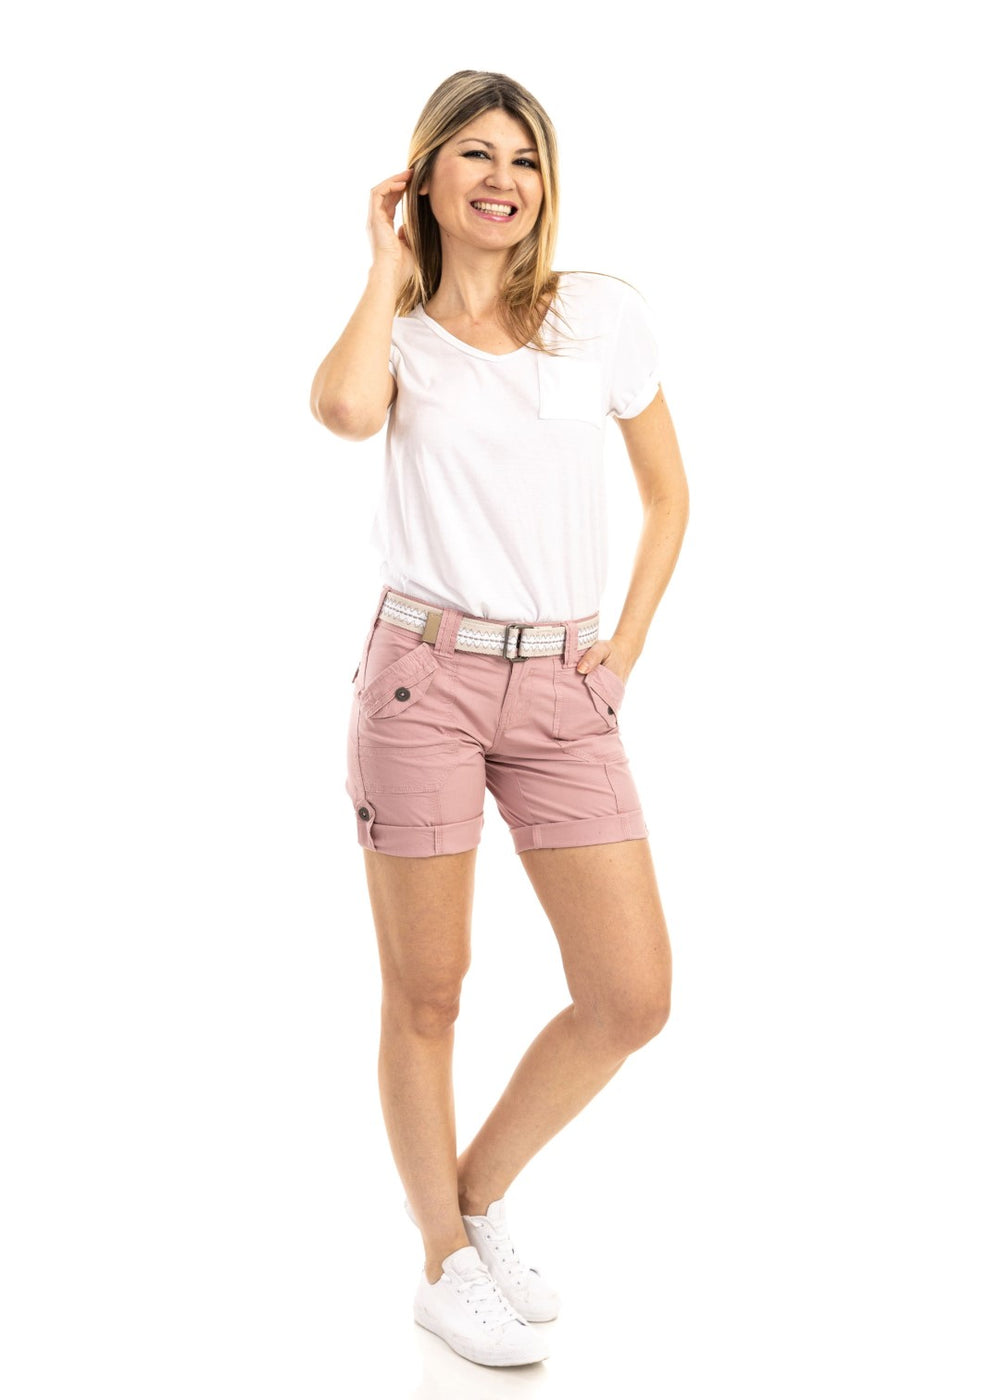 HSMQHJWE Colorfulkoala Biker Shorts Jean Shorts For Women Denim Women Cargo  Shorts Summer Loose Hiking Bermuda Shorts With Pockets Short Sleeve Crop